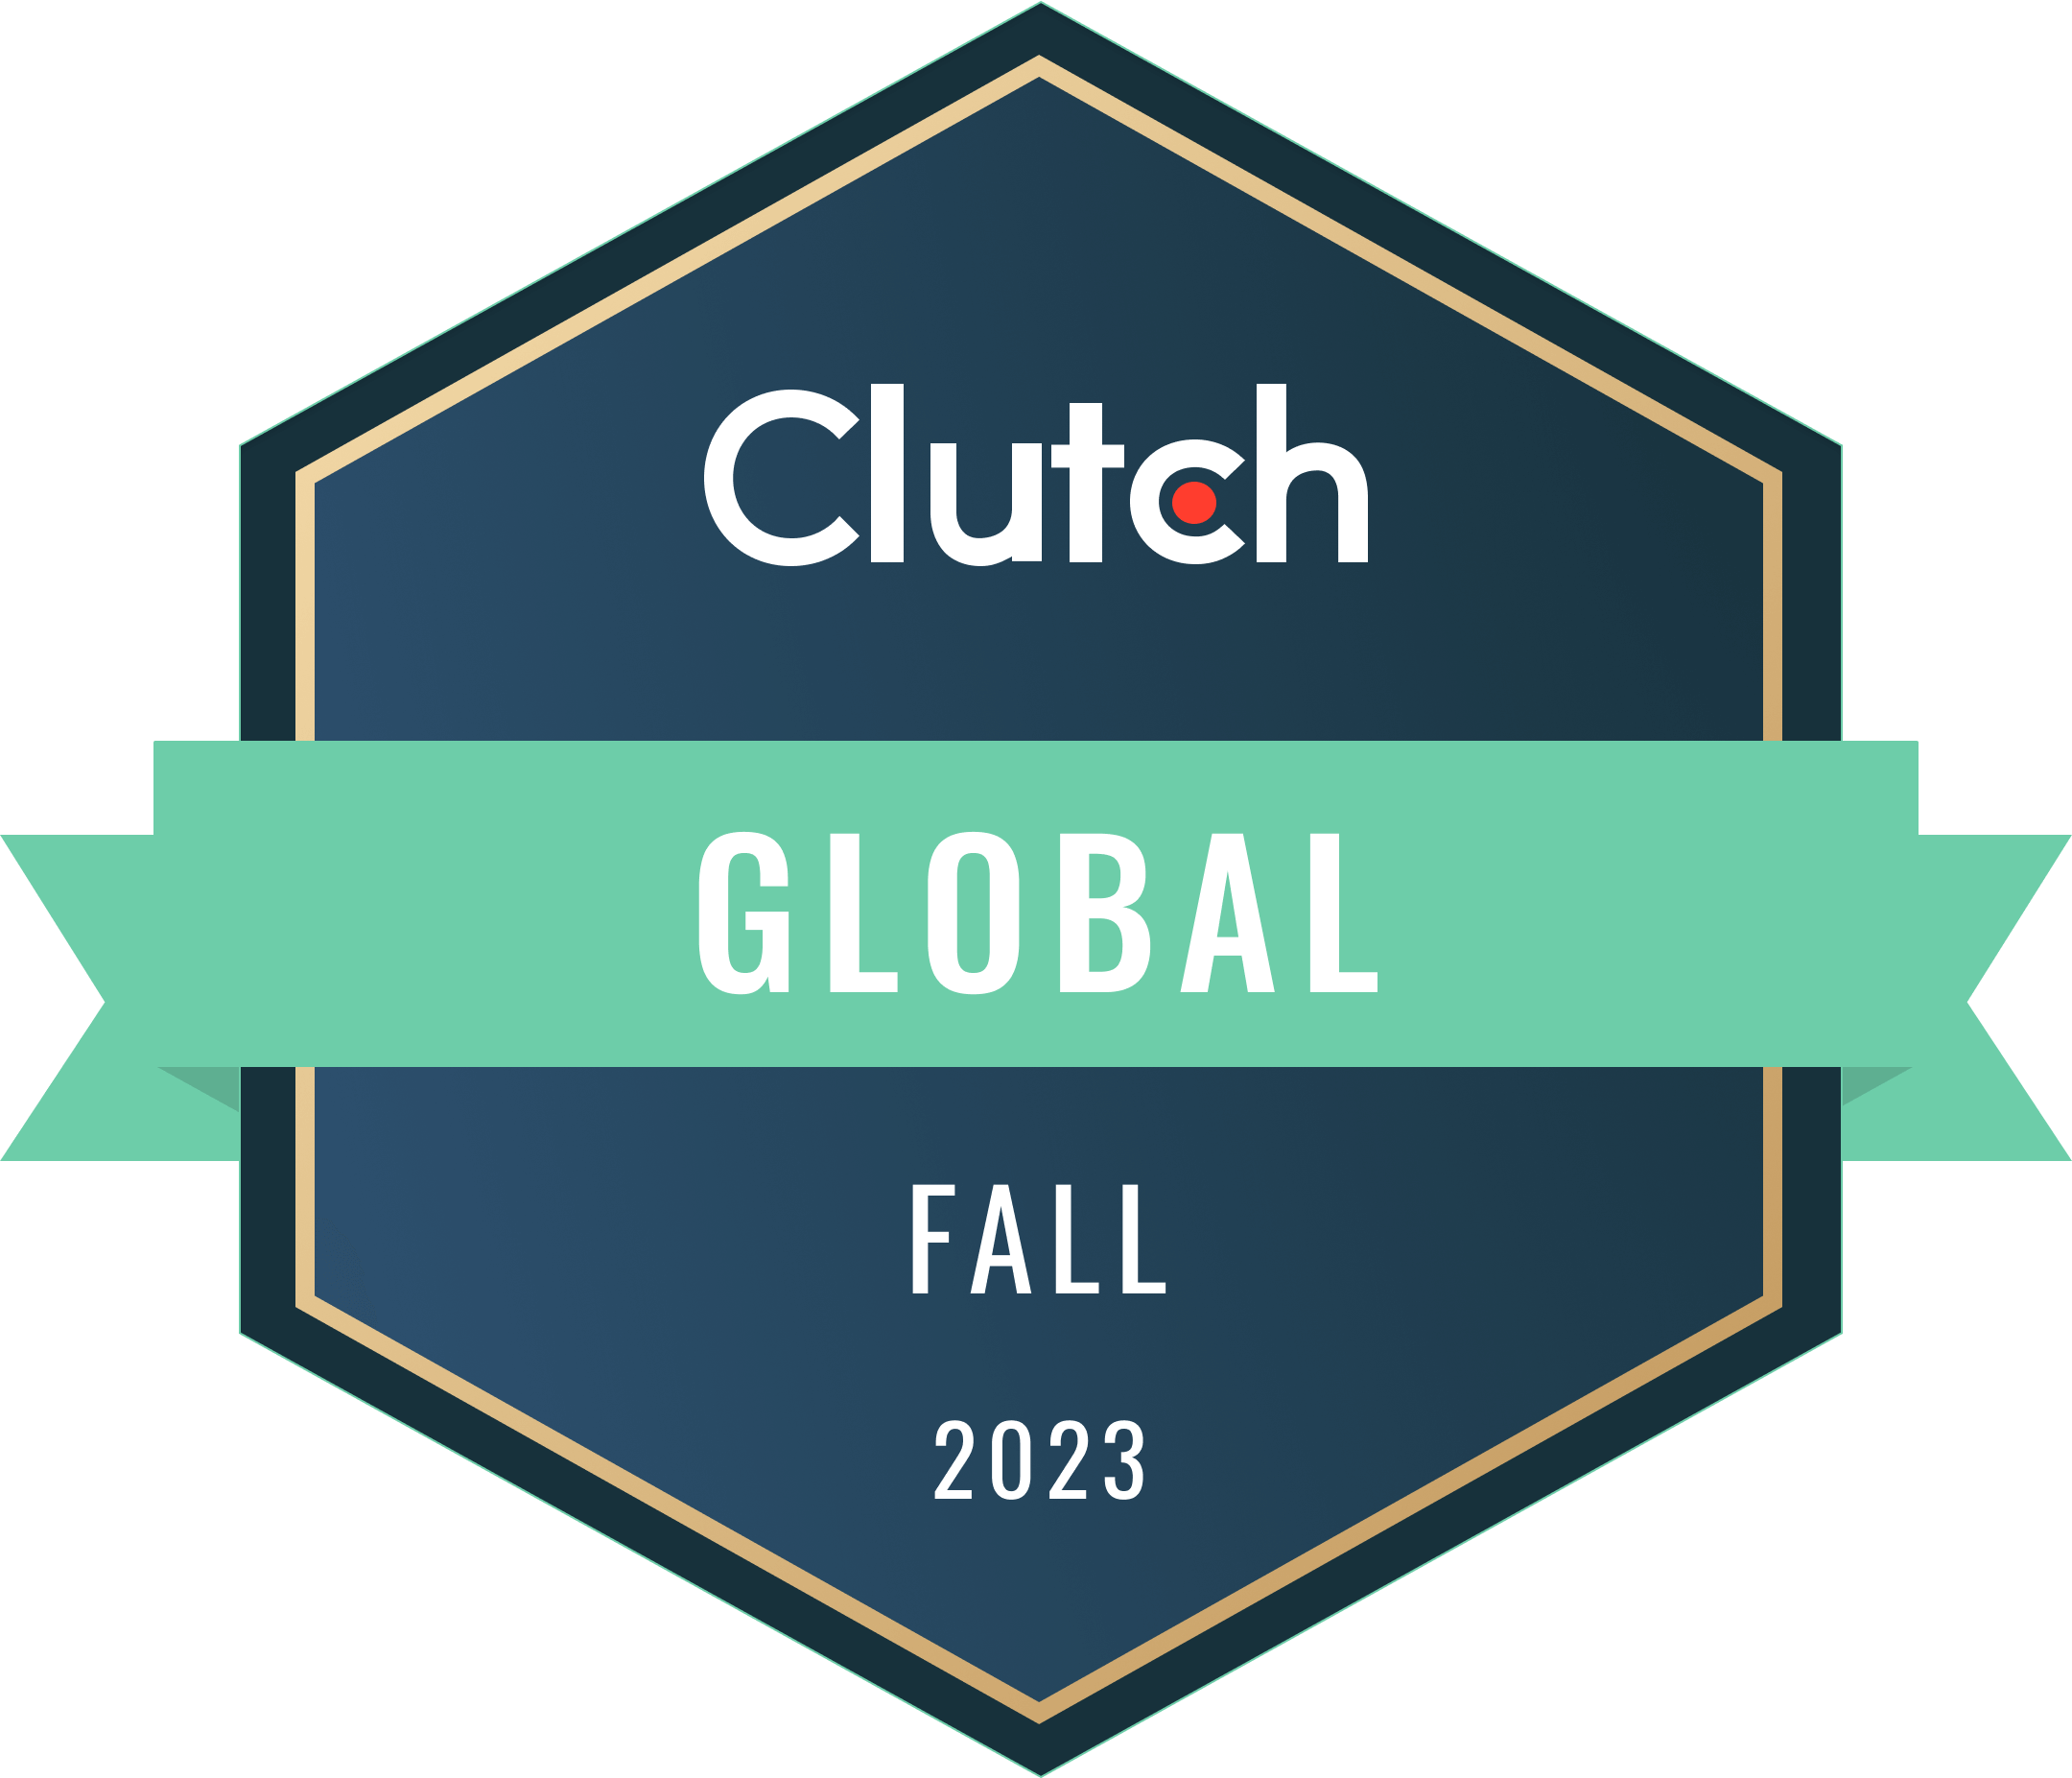 premiul global clutch